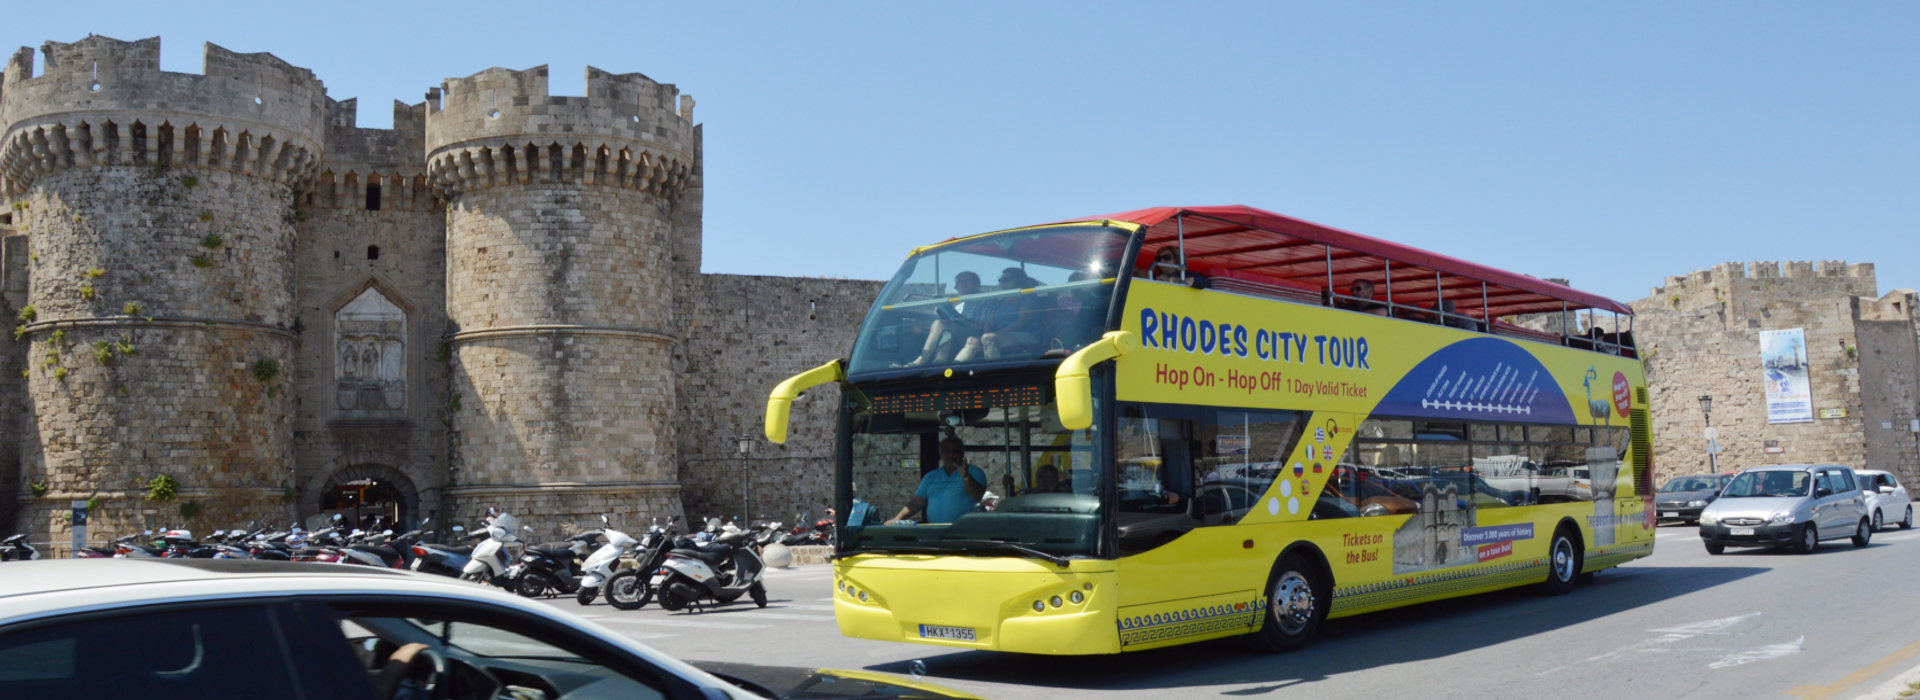 Prohlídka města Rhodos Open Bus | Captains Tours